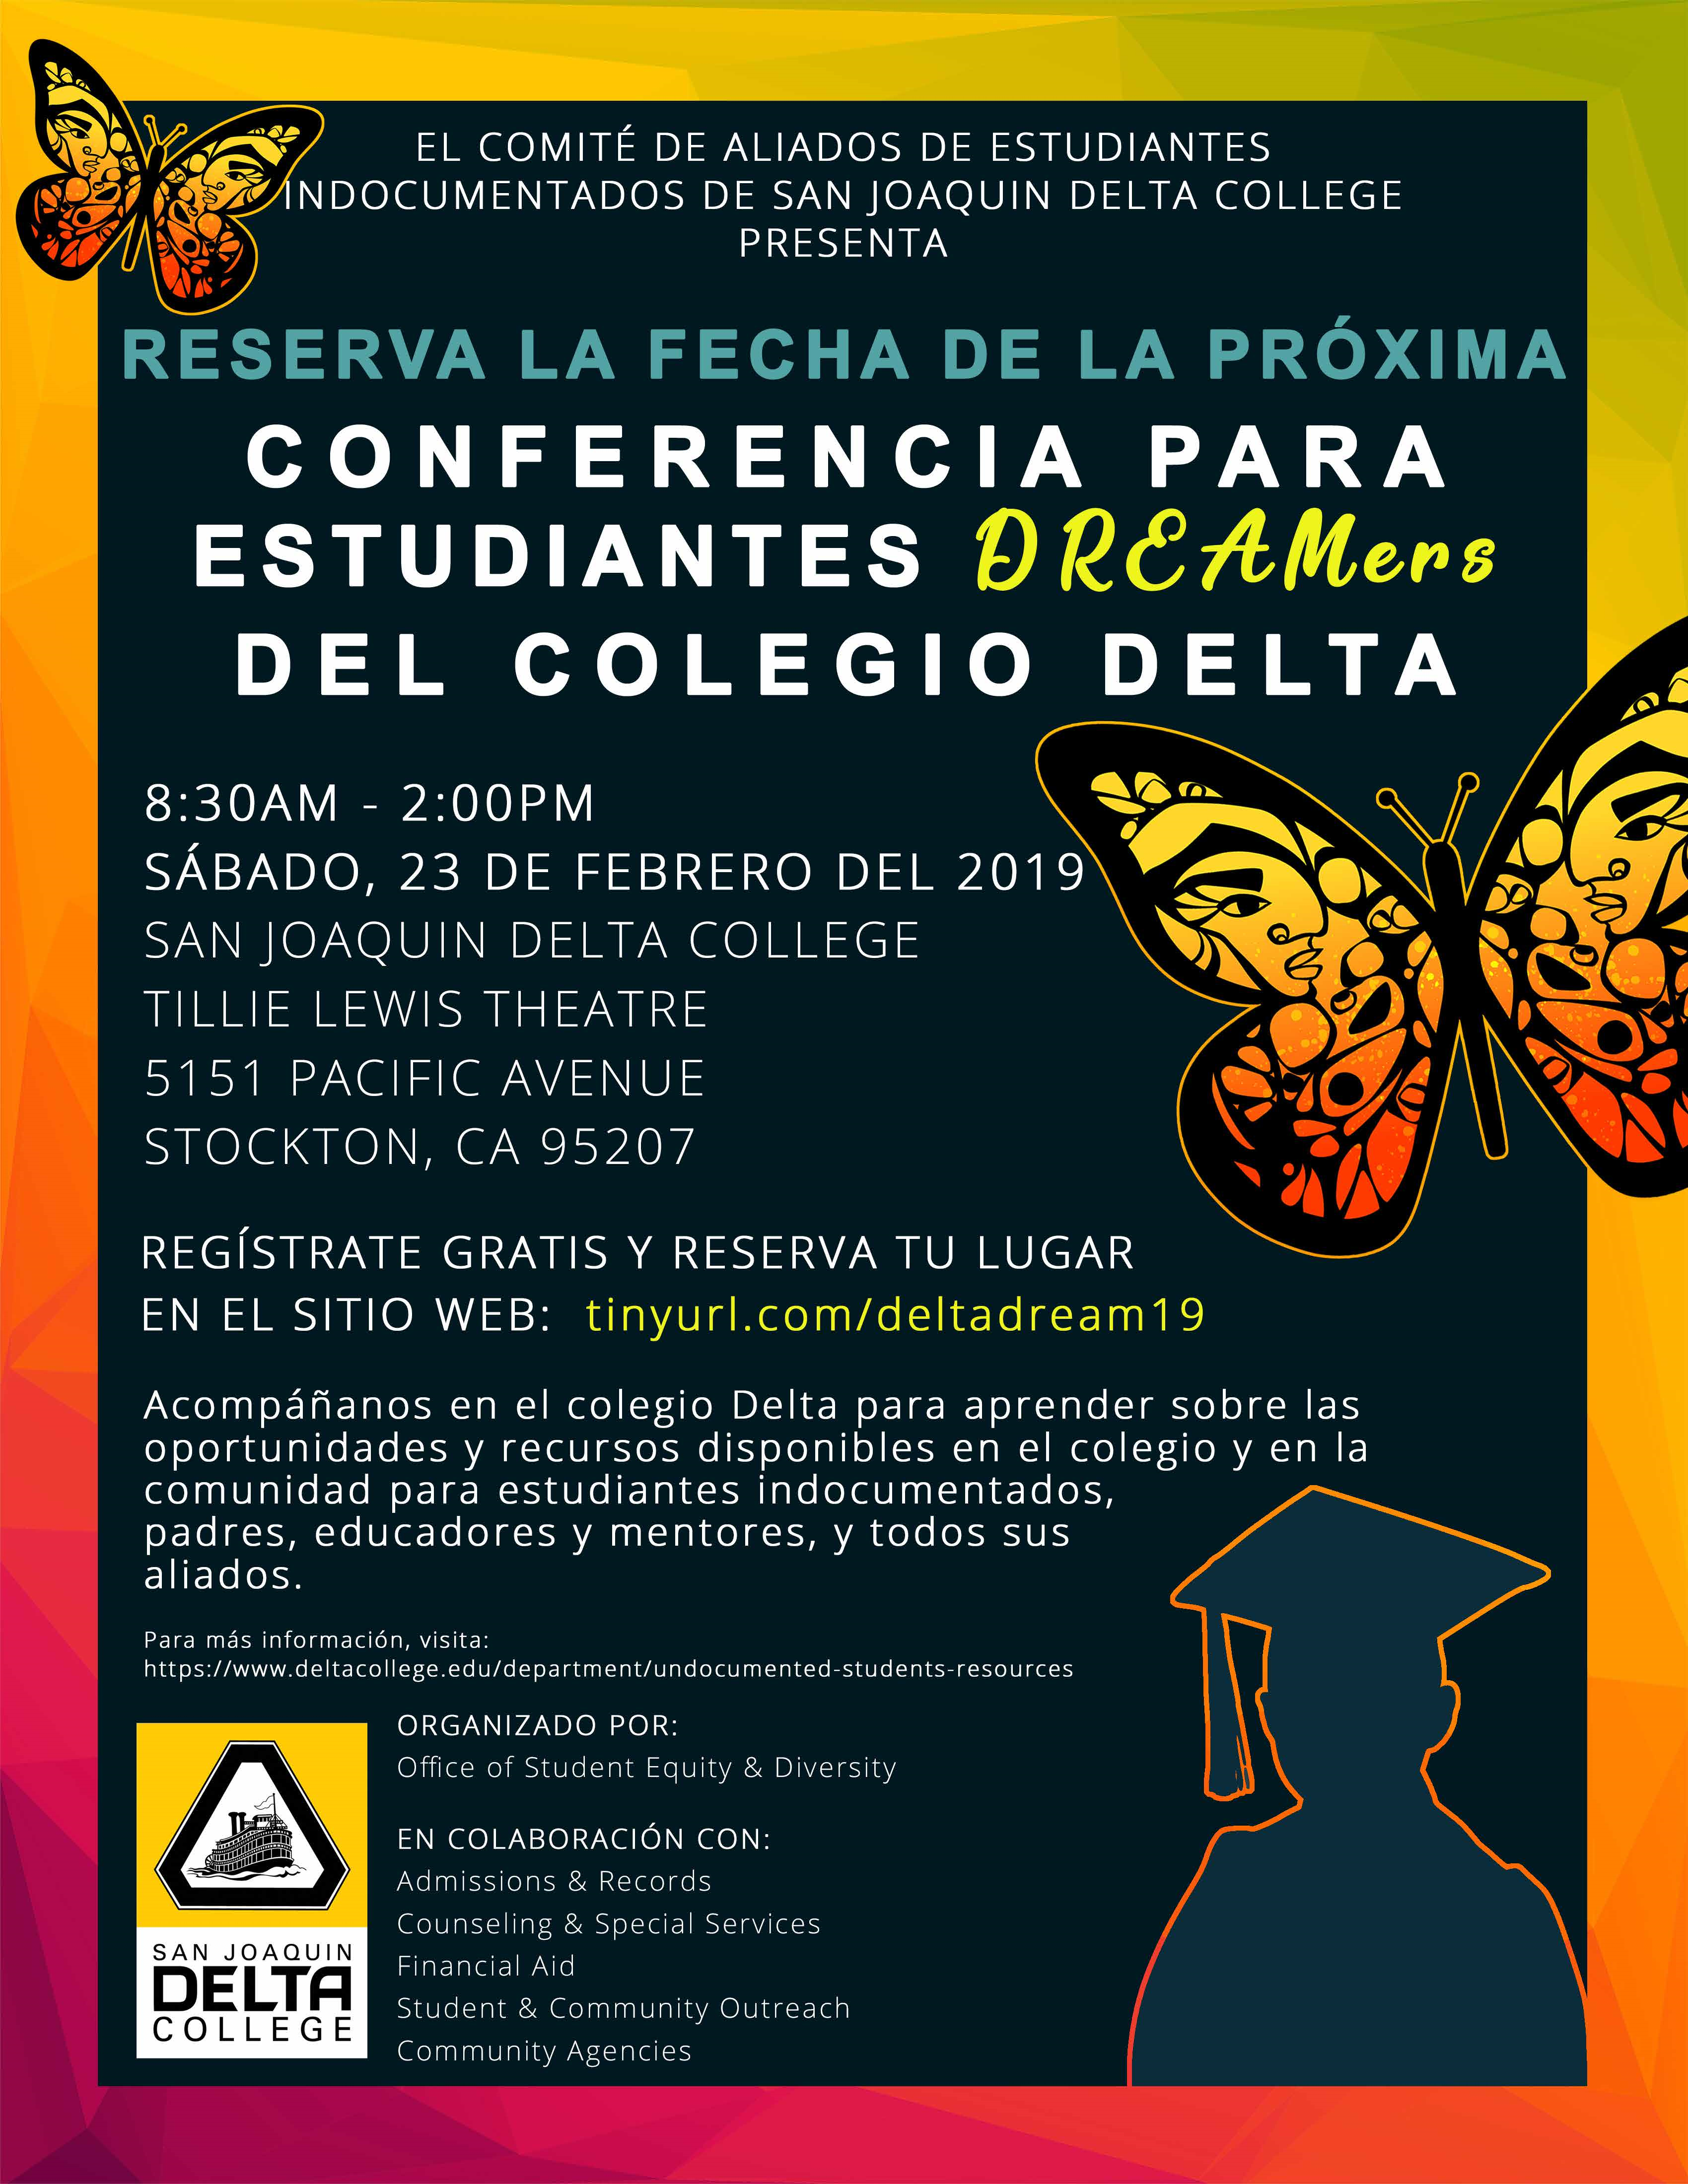 San Joaquin Delta College's DREAM Conference will support undocumented students.